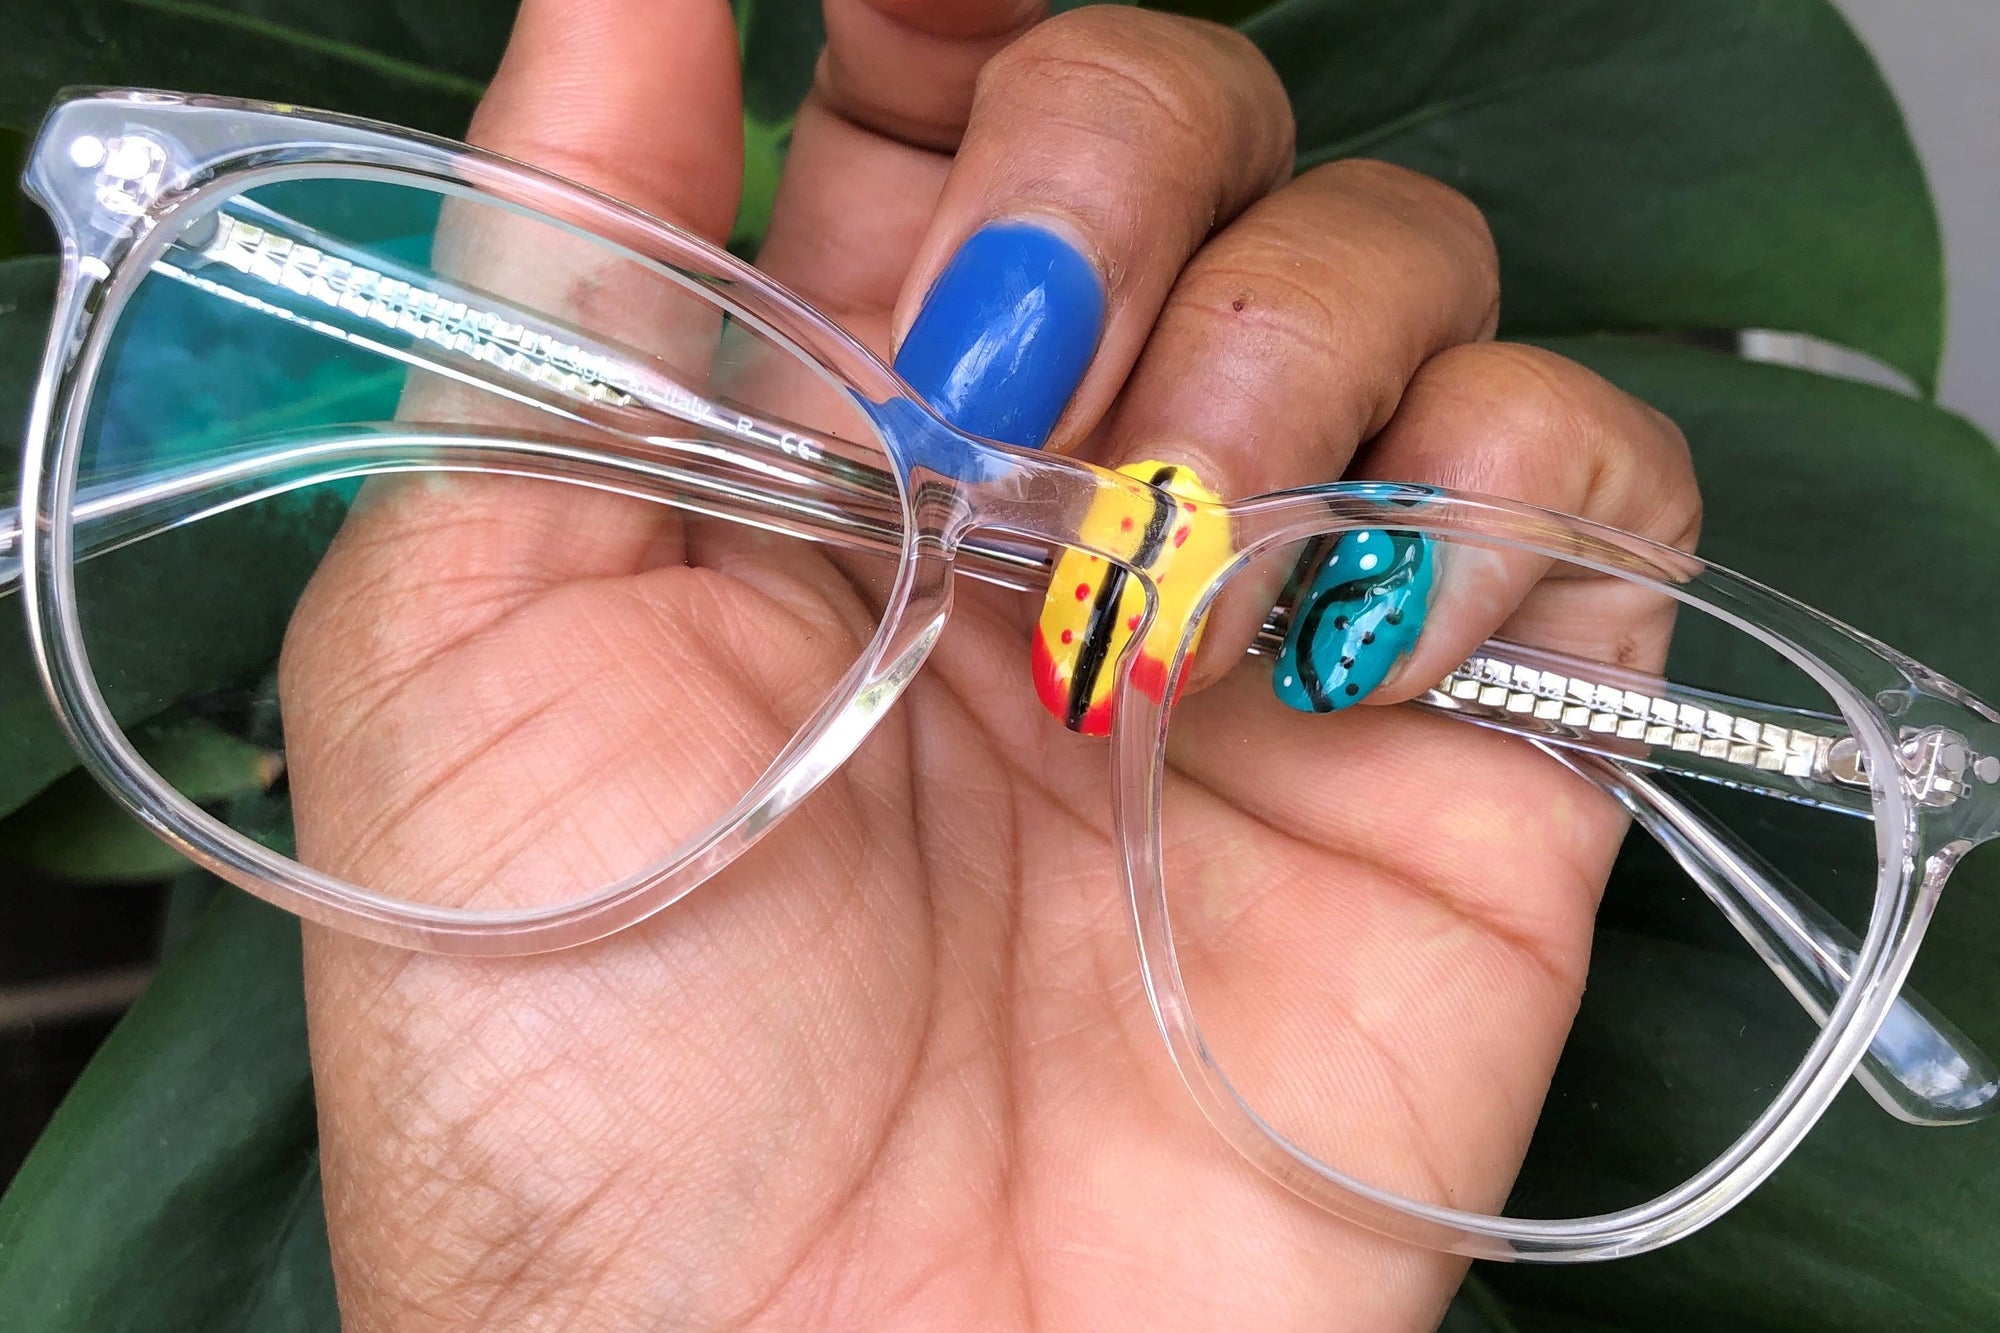 can cheap glasses damage your eyes? | KOALAEYE OPTICAL